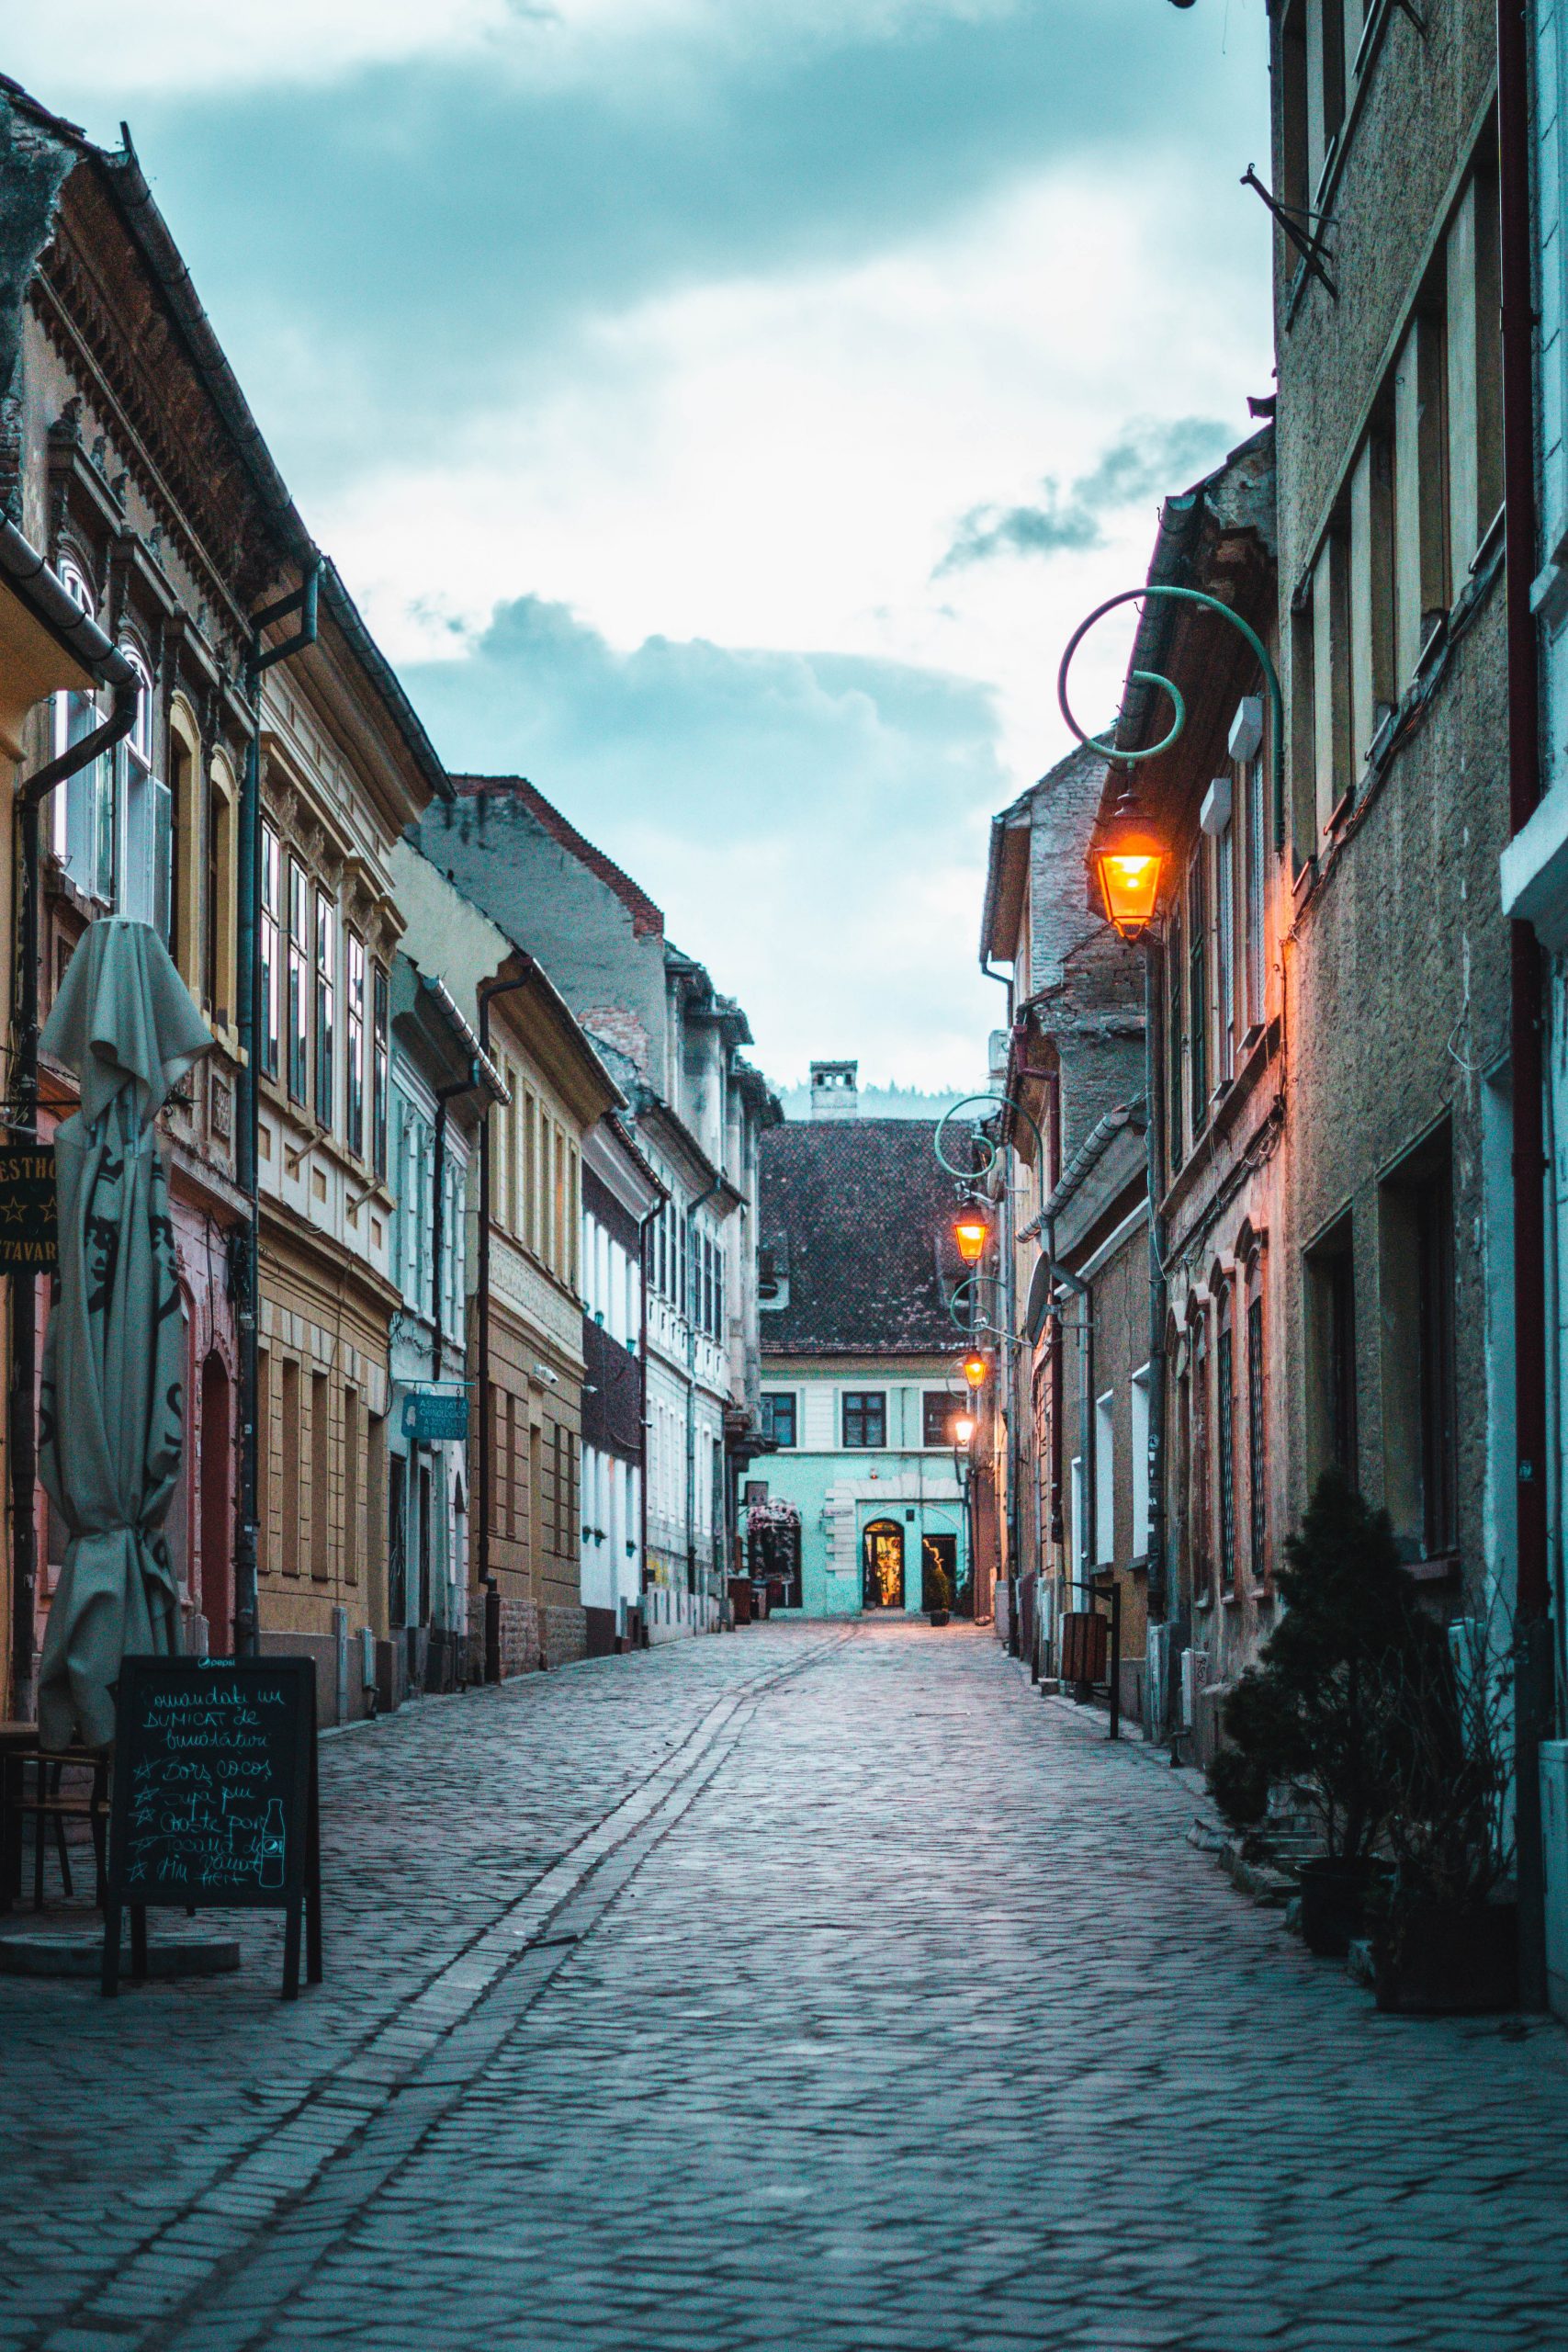 Stroll the medieval streets in Brasov